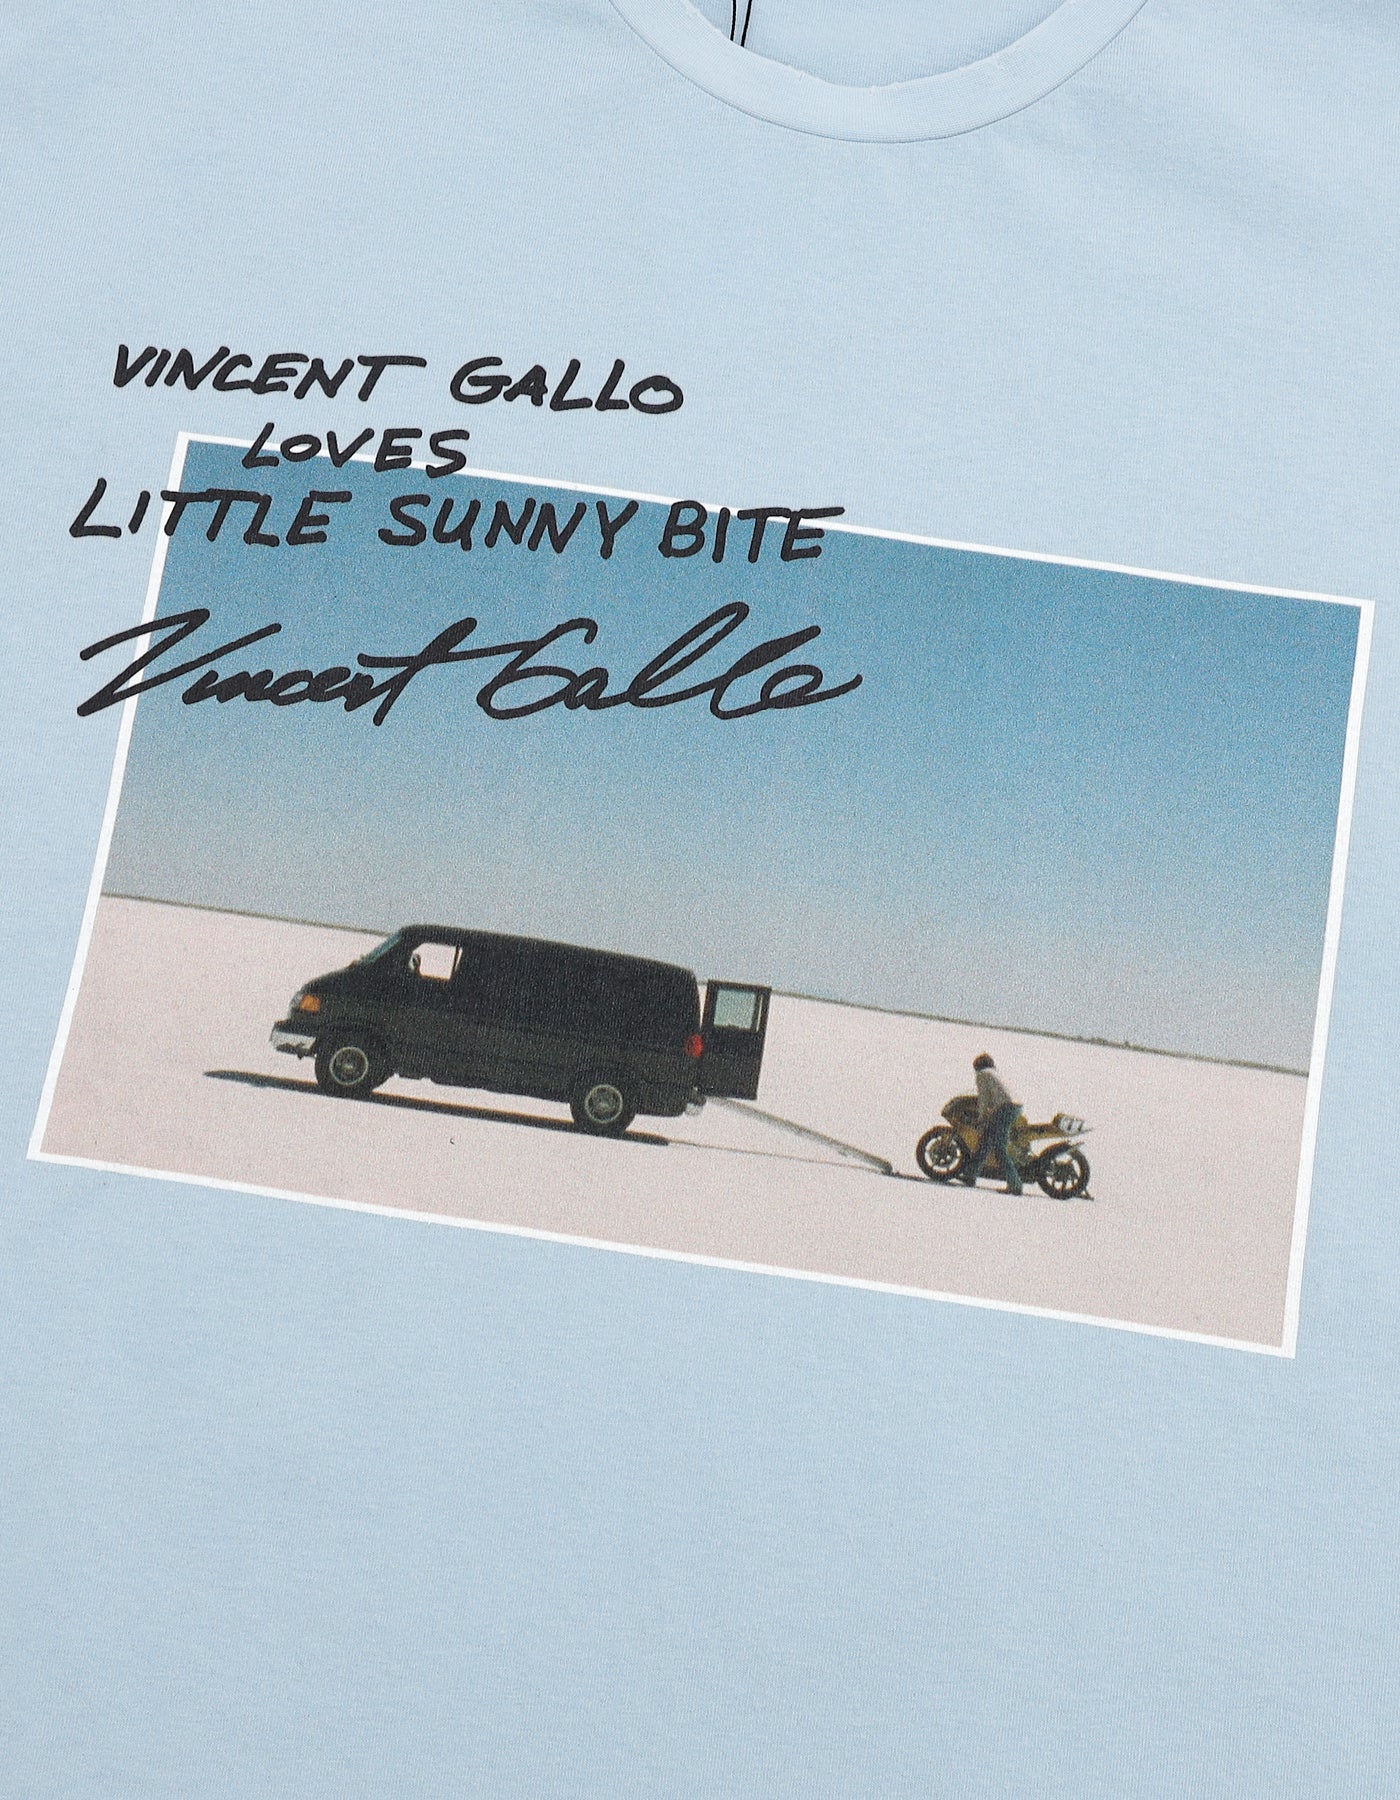 Vincent Gallo x little sunny bite photo tee / BLUE